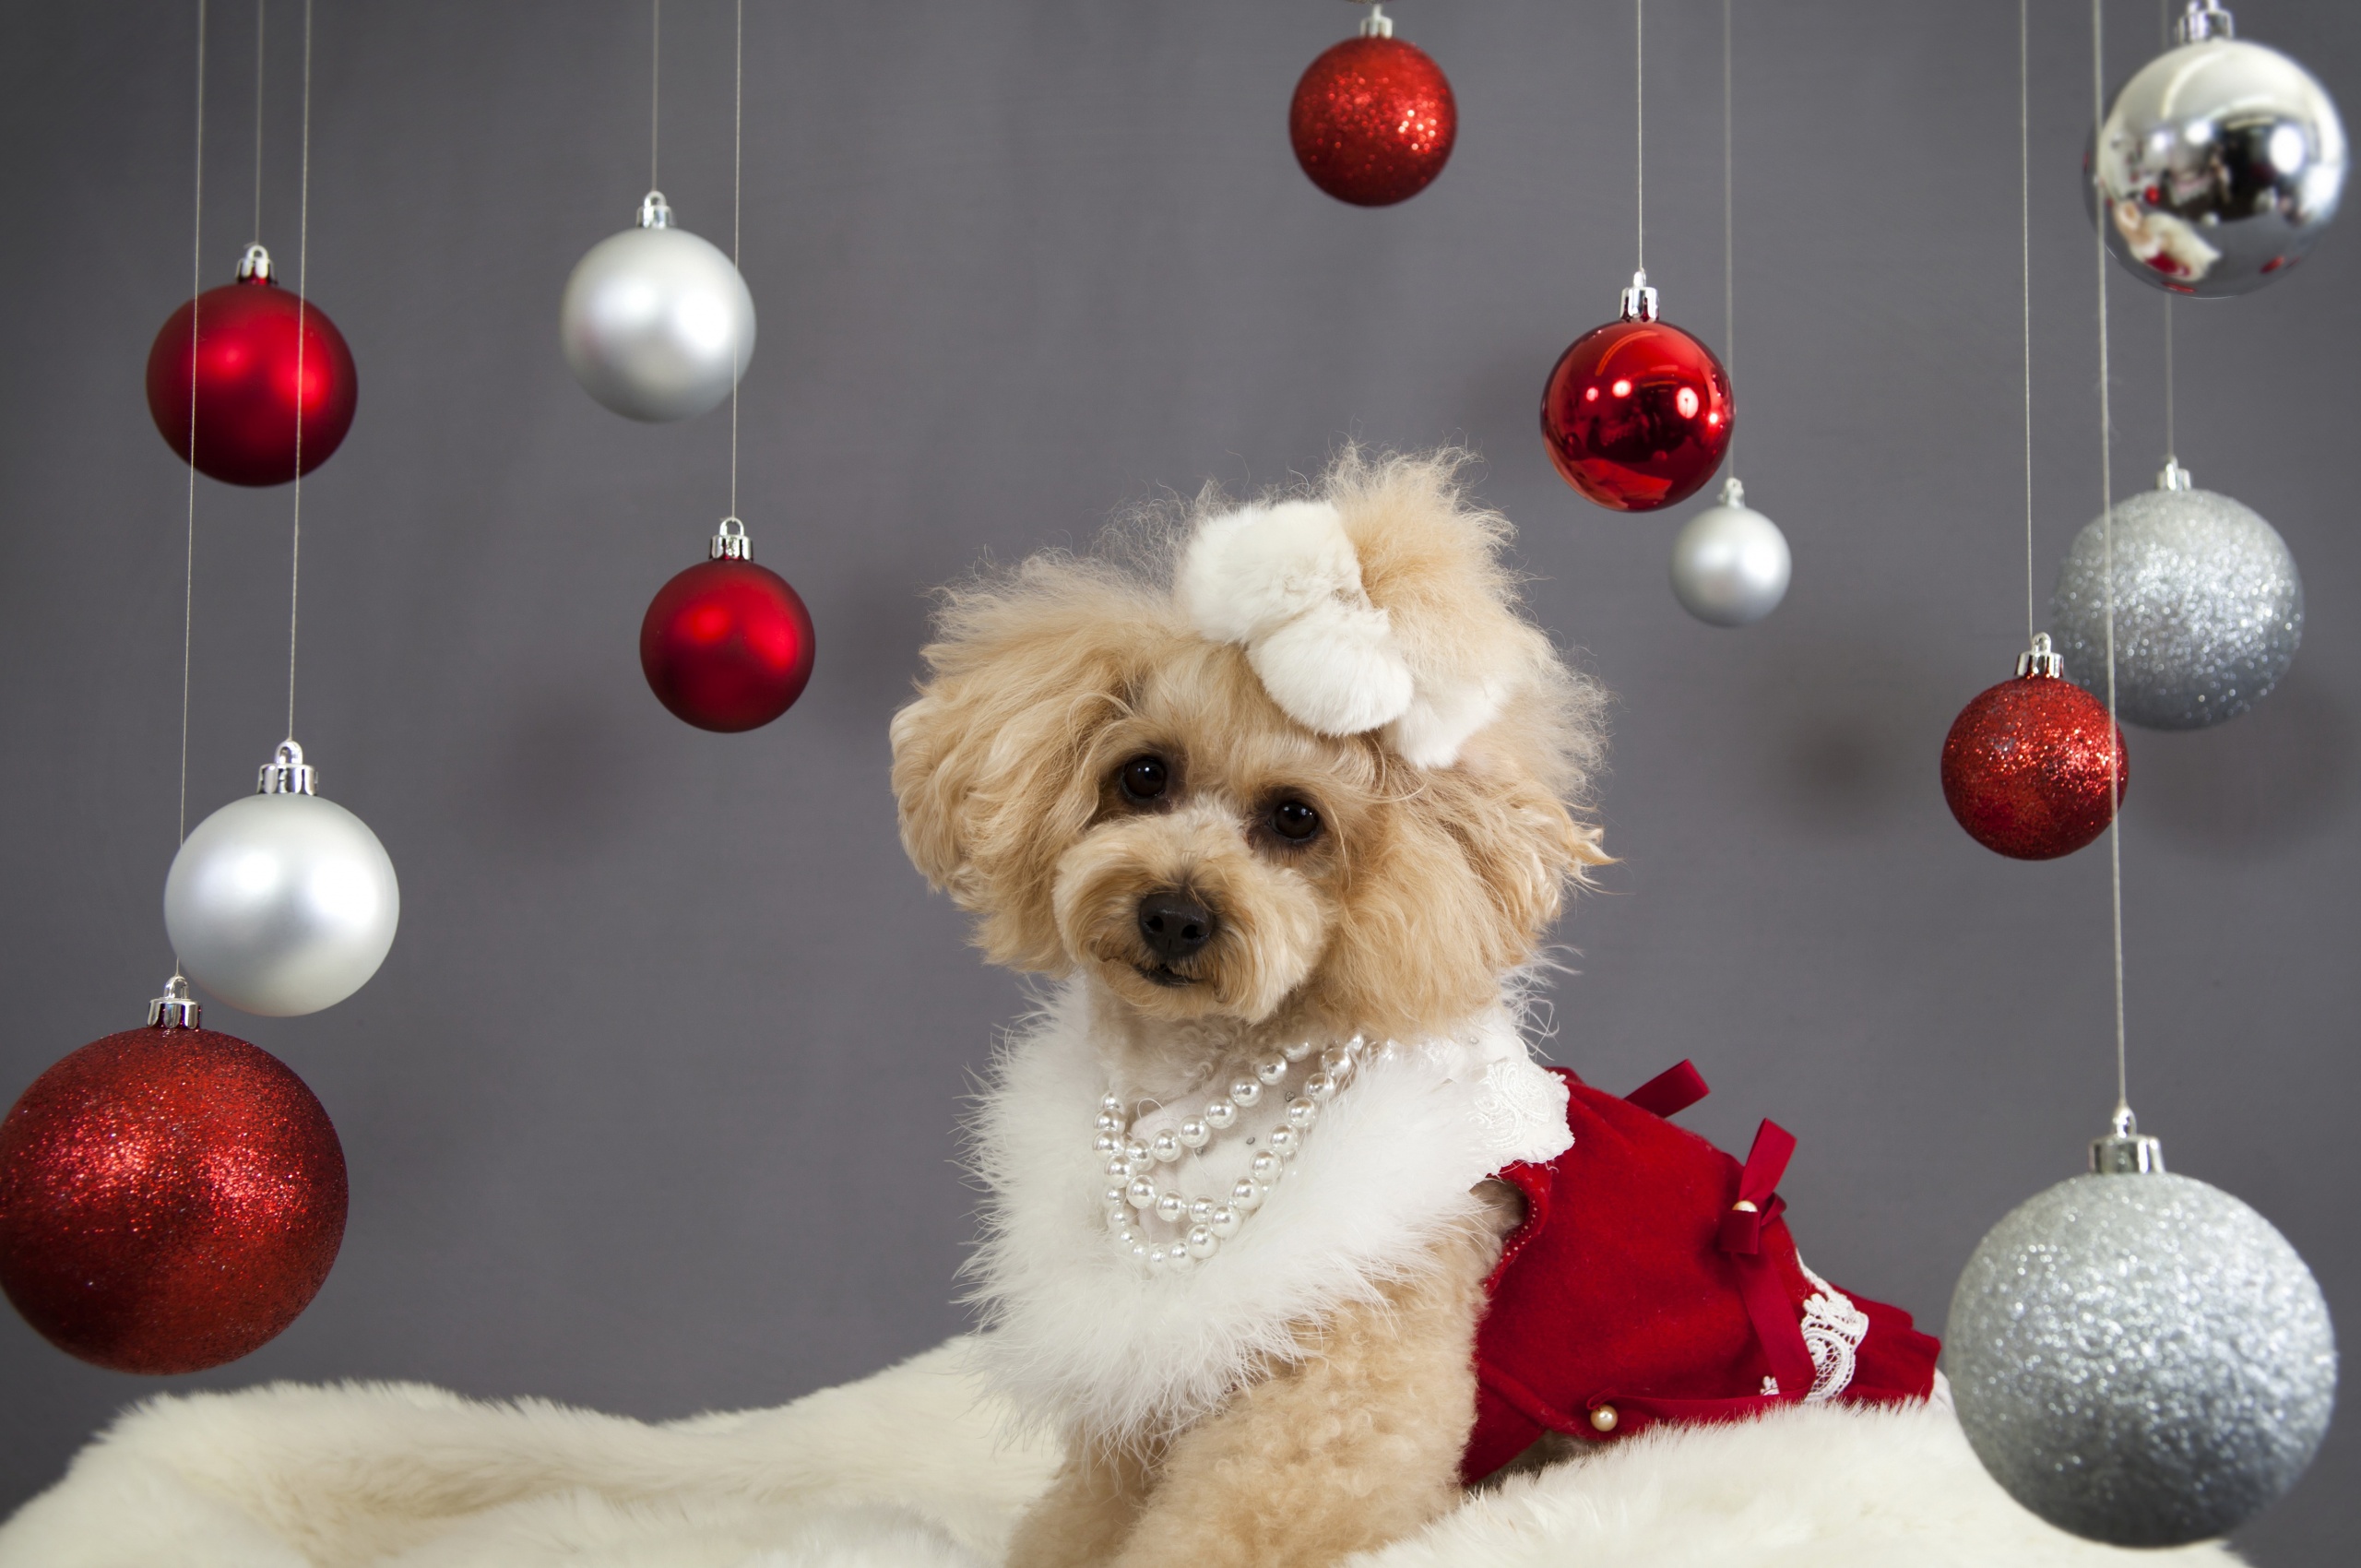 Dog And Christmas Decorations